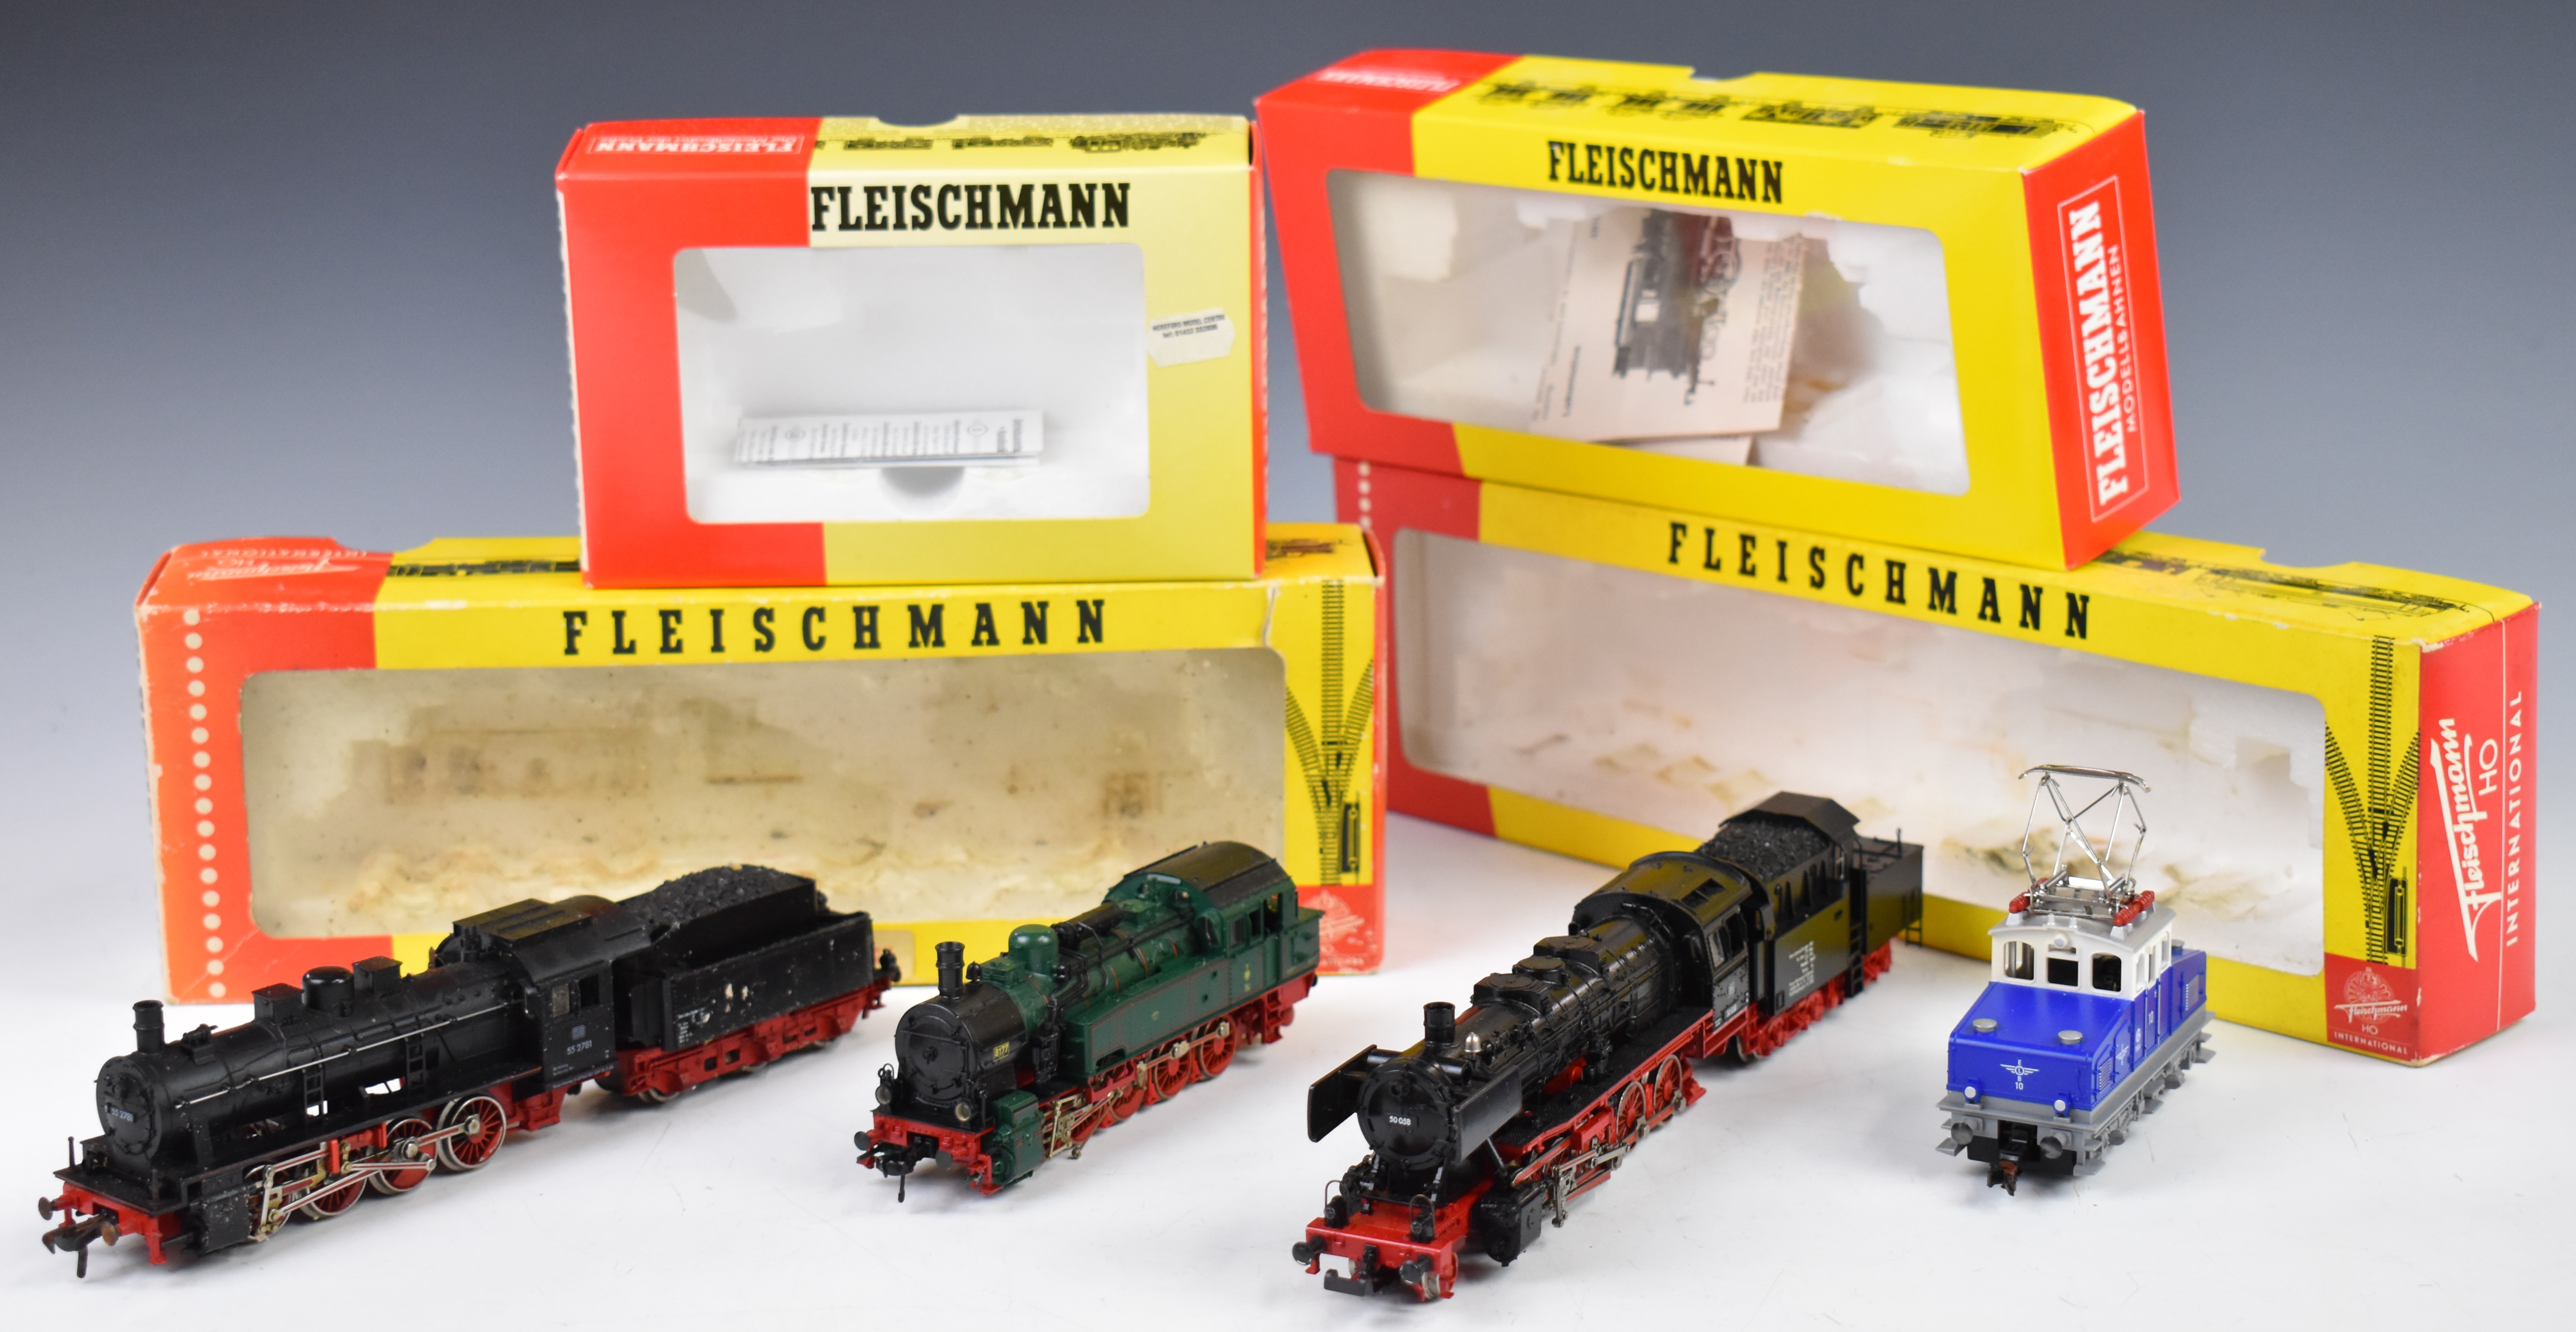 Four Fleischmann HO or 00 gauge model railway locomotives comprising 1363 tender locomotive, 4146